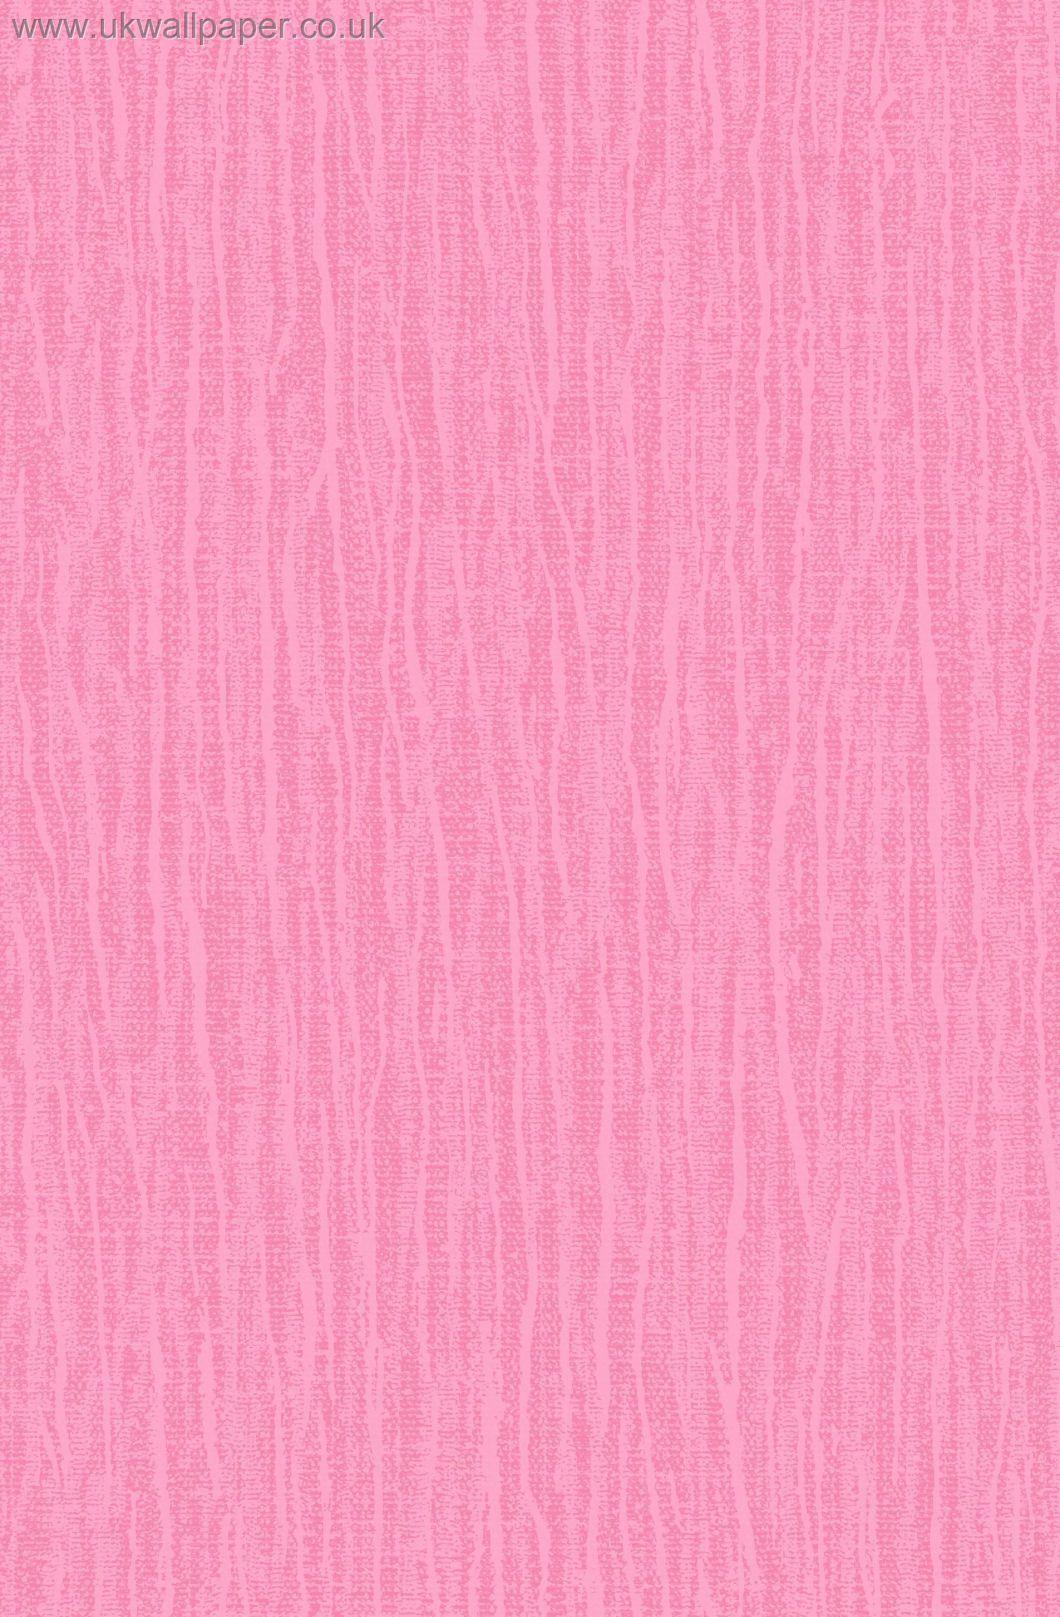 Plain Pink Wallpaper HD